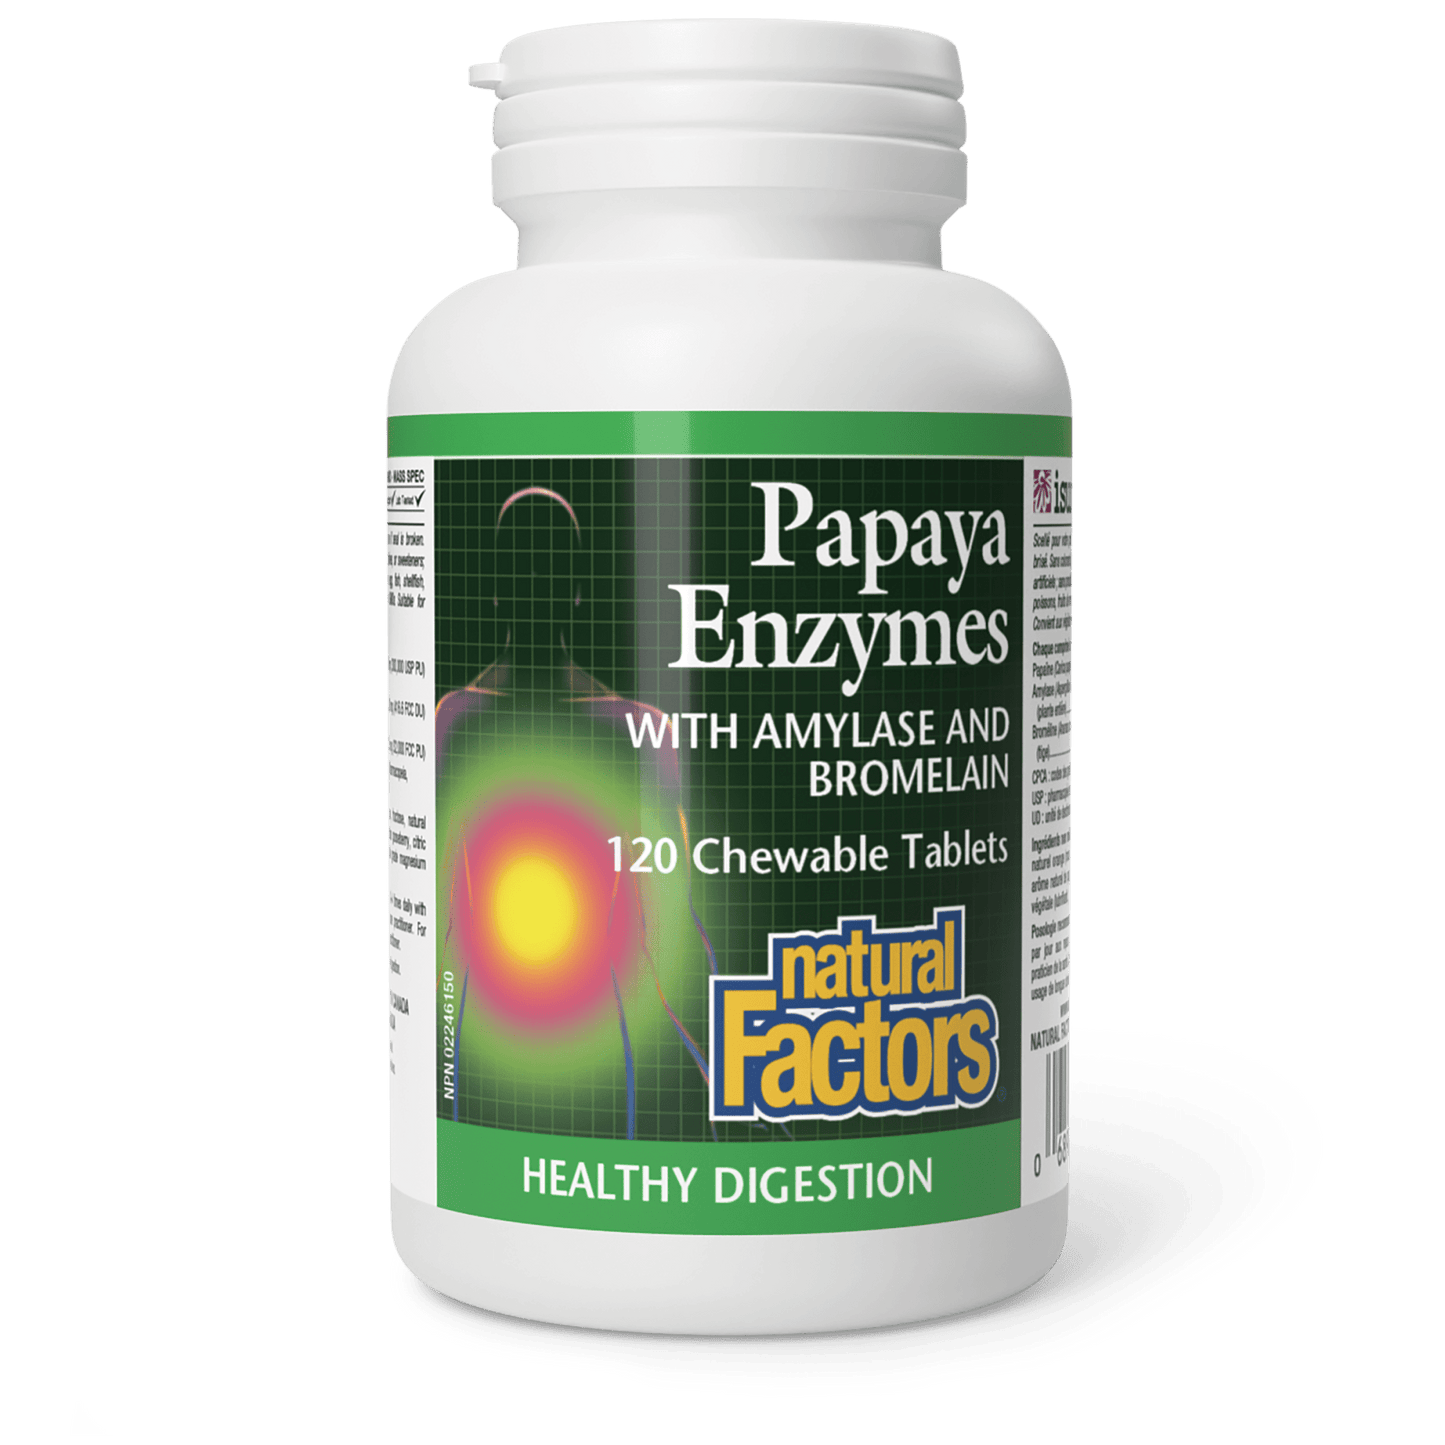 Papaya Enzymes with Amylase and Bromelain, Natural Factors|v|image|1749